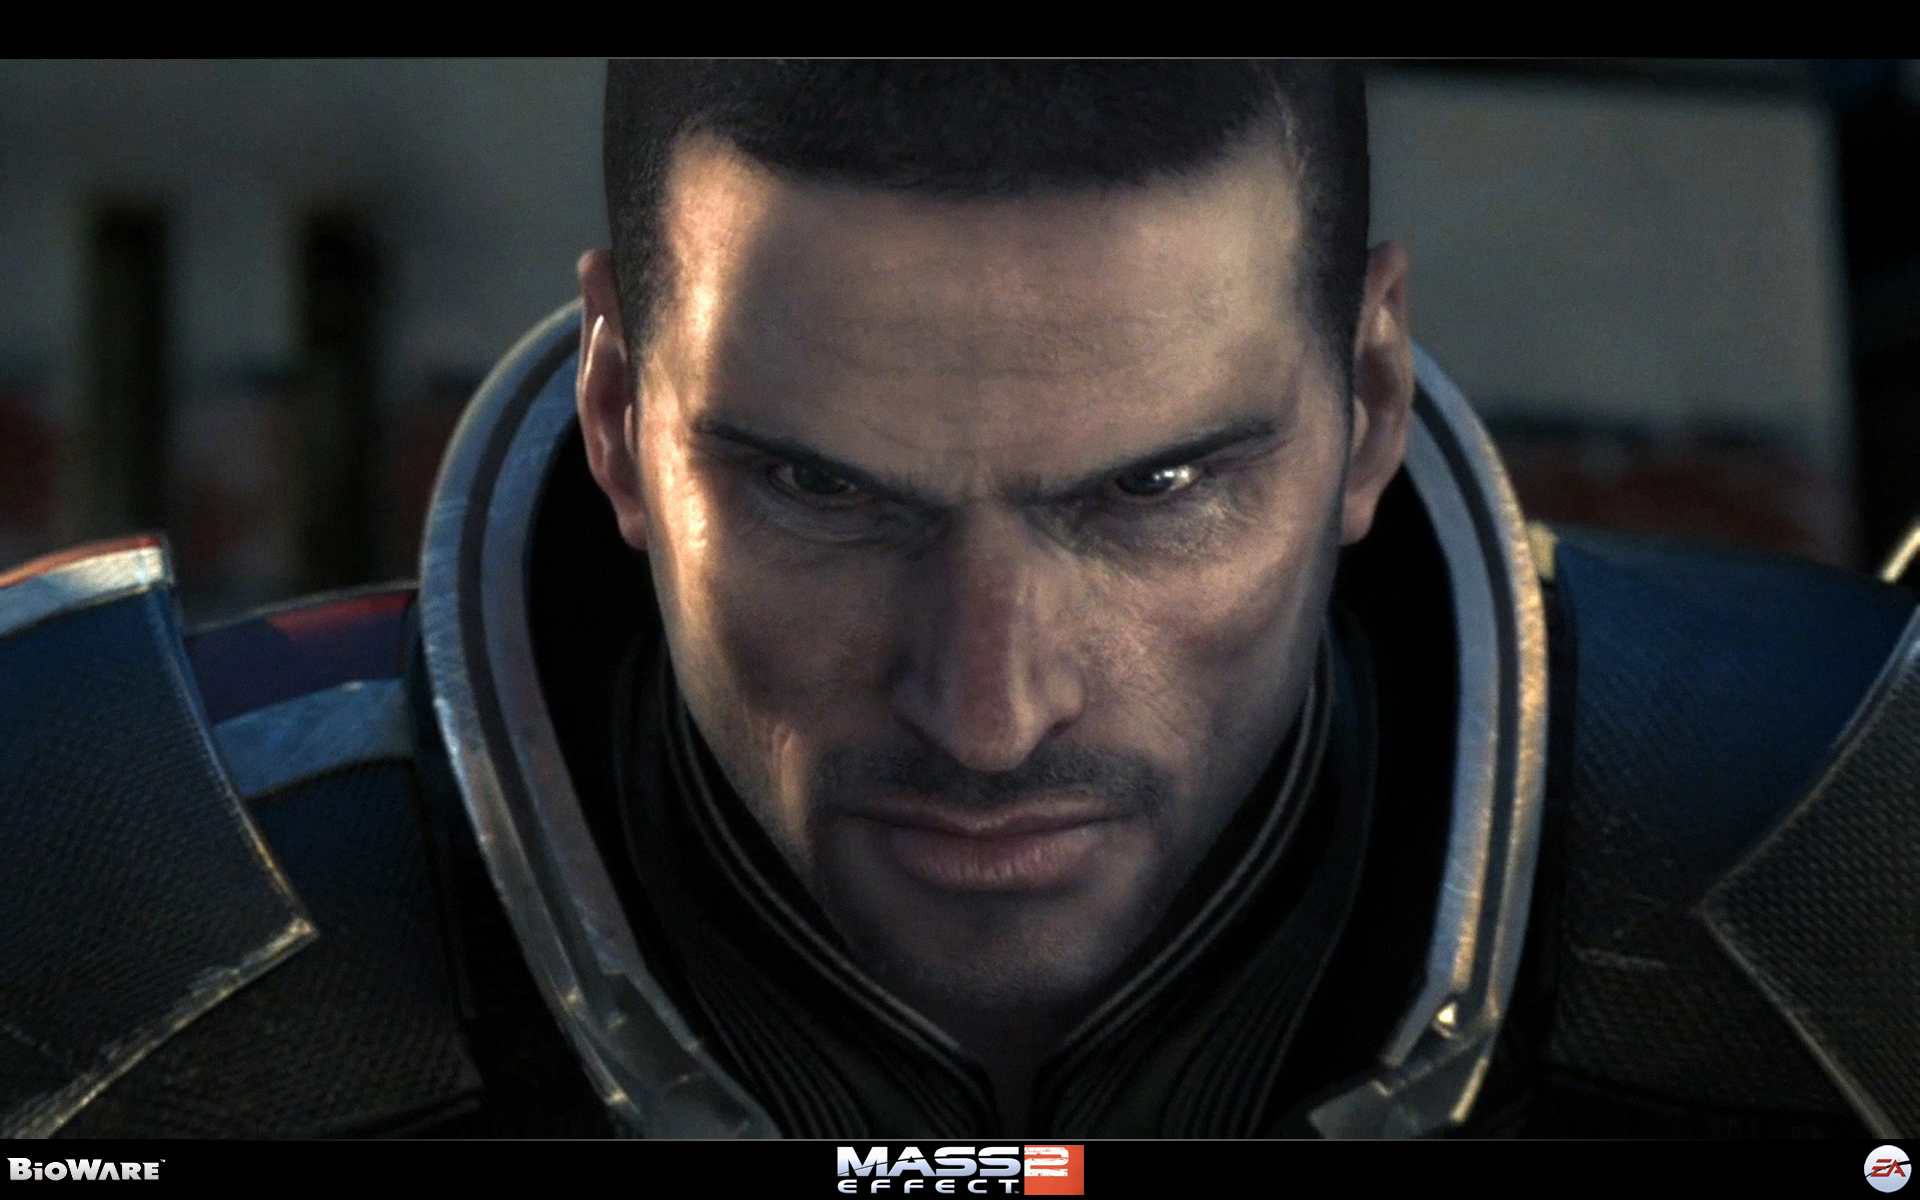 видеоигры, Mass Effect, Командор Шепард - обои на рабочий стол